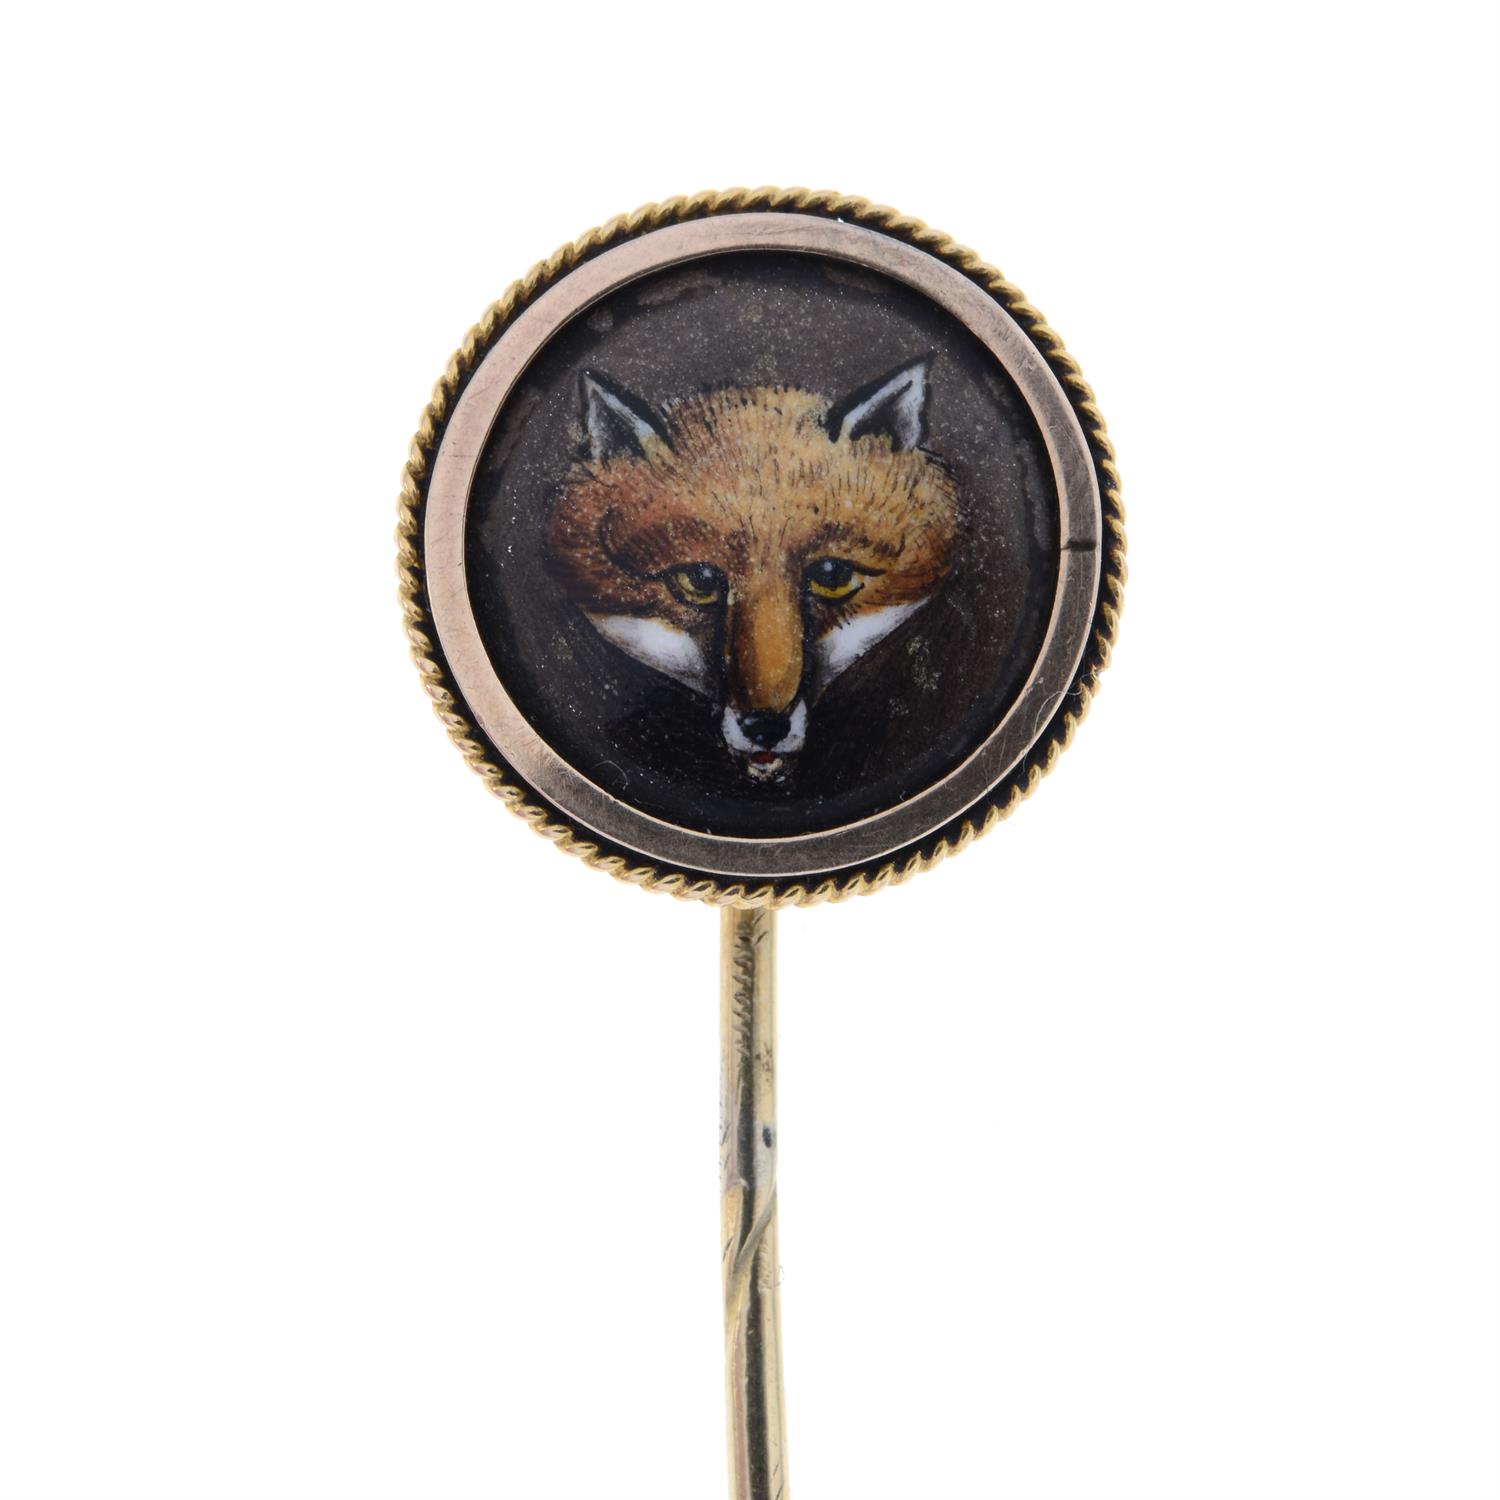 Late Victorian stickpin, depicting a fox